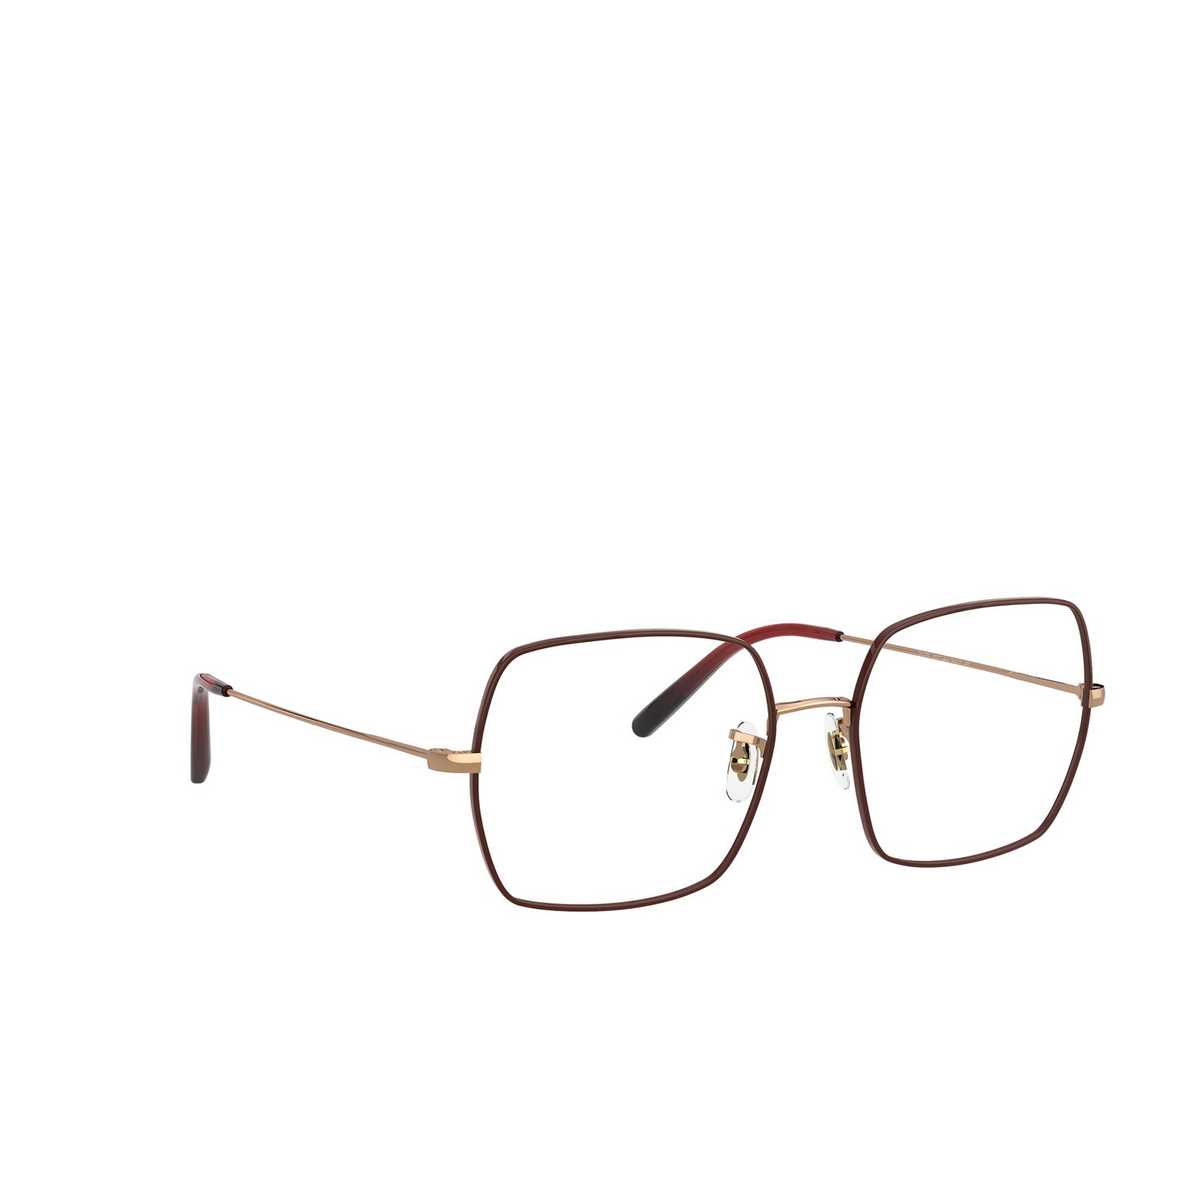 Oliver Peoples® Irregular Eyeglasses: Justyna OV1279 color Rose Gold / Burgundy 5037 - three-quarters view.